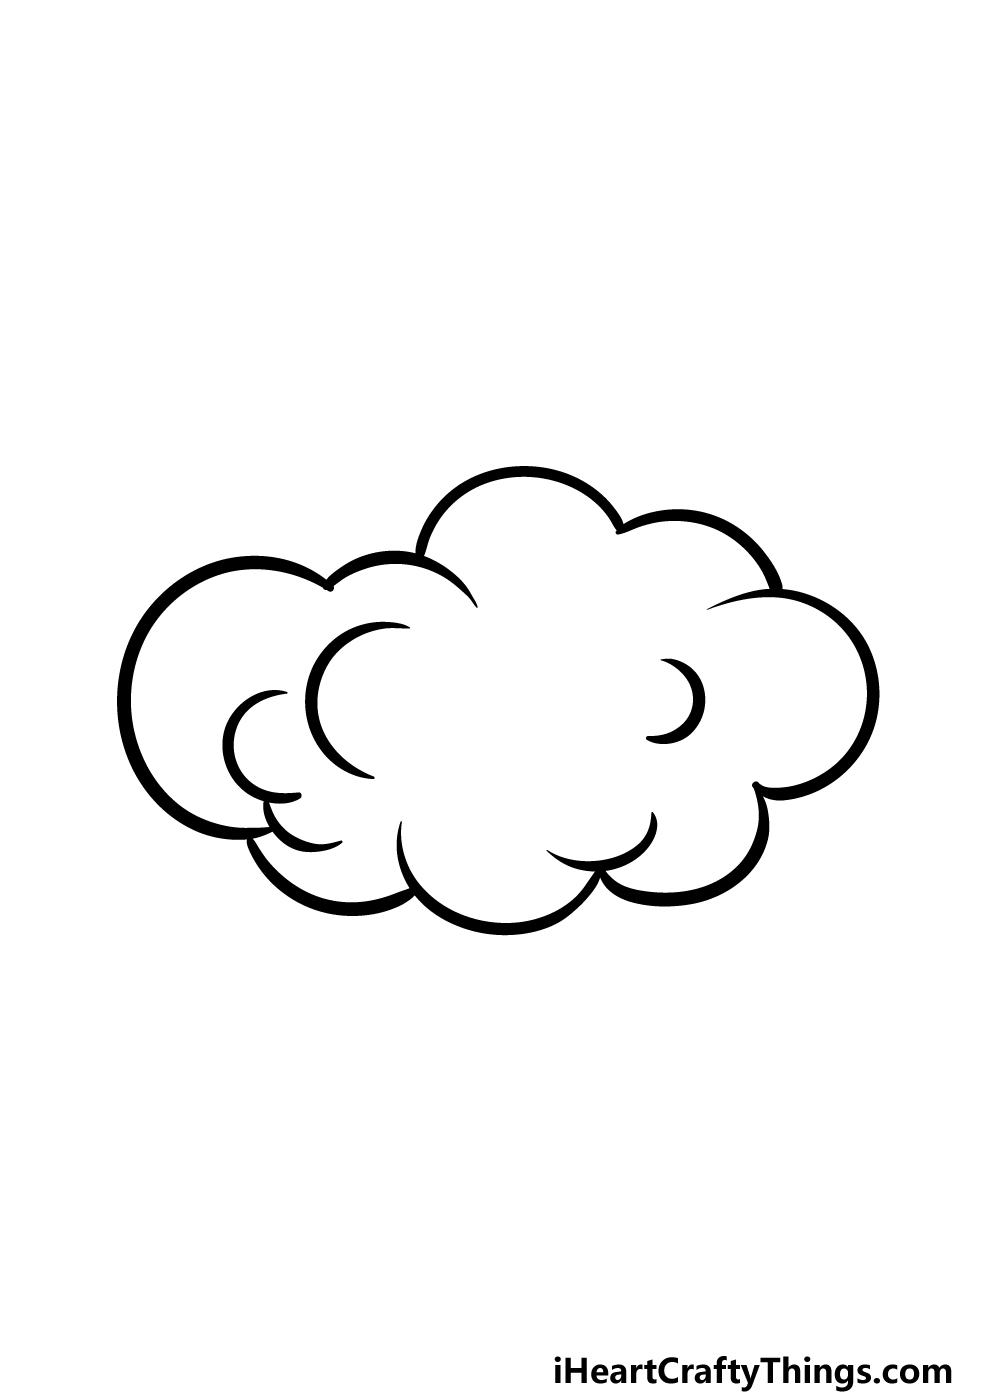 How to Draw A Cartoon cloud step 5